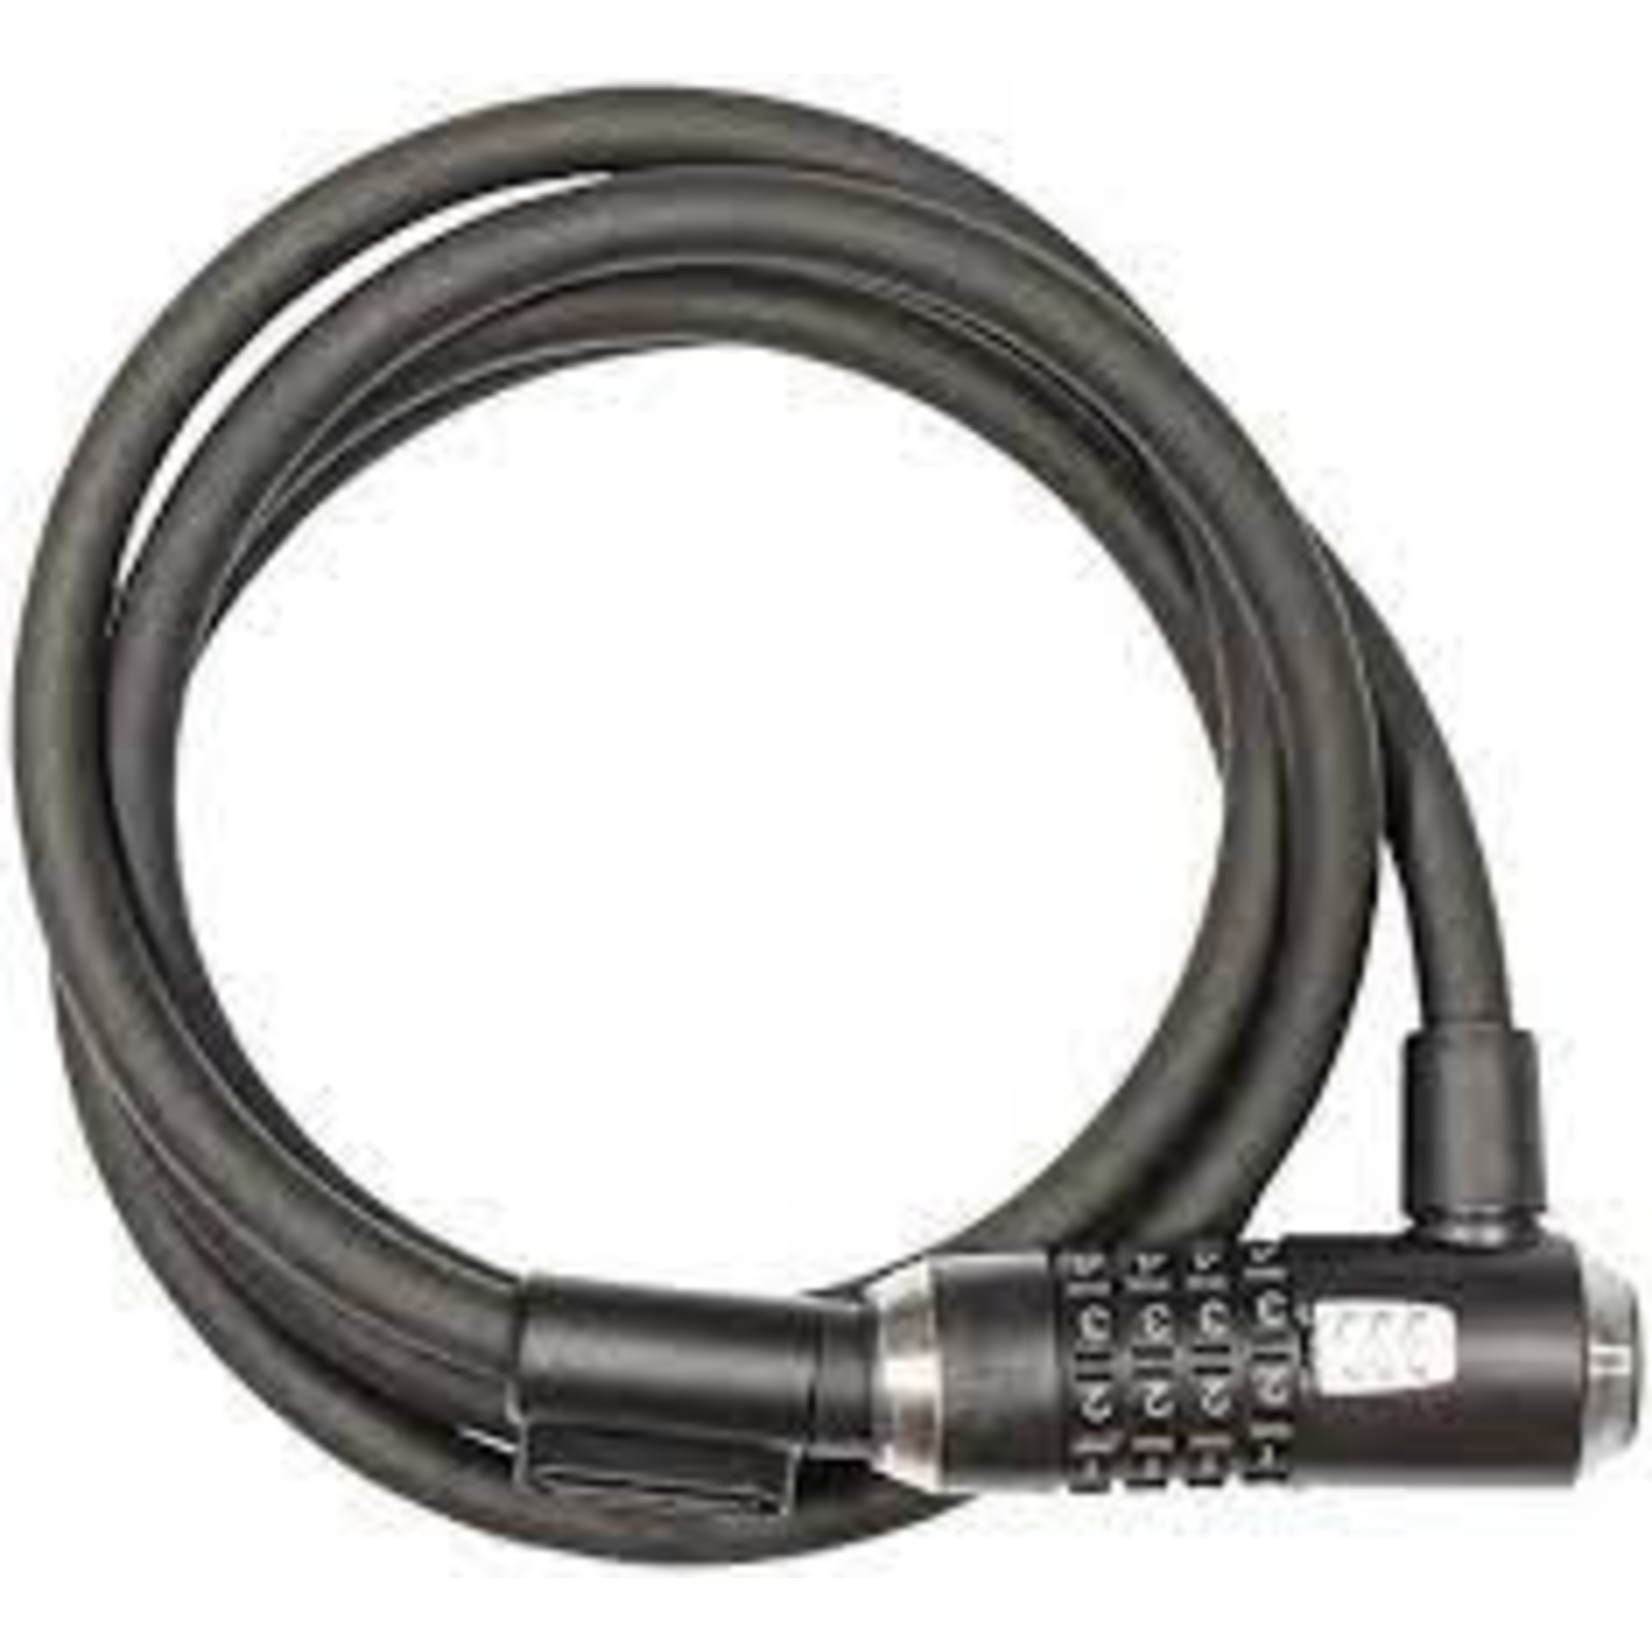 Kryptonite KryptoFlex 1018 Cable Lock w/ Combo 6 x 10mm